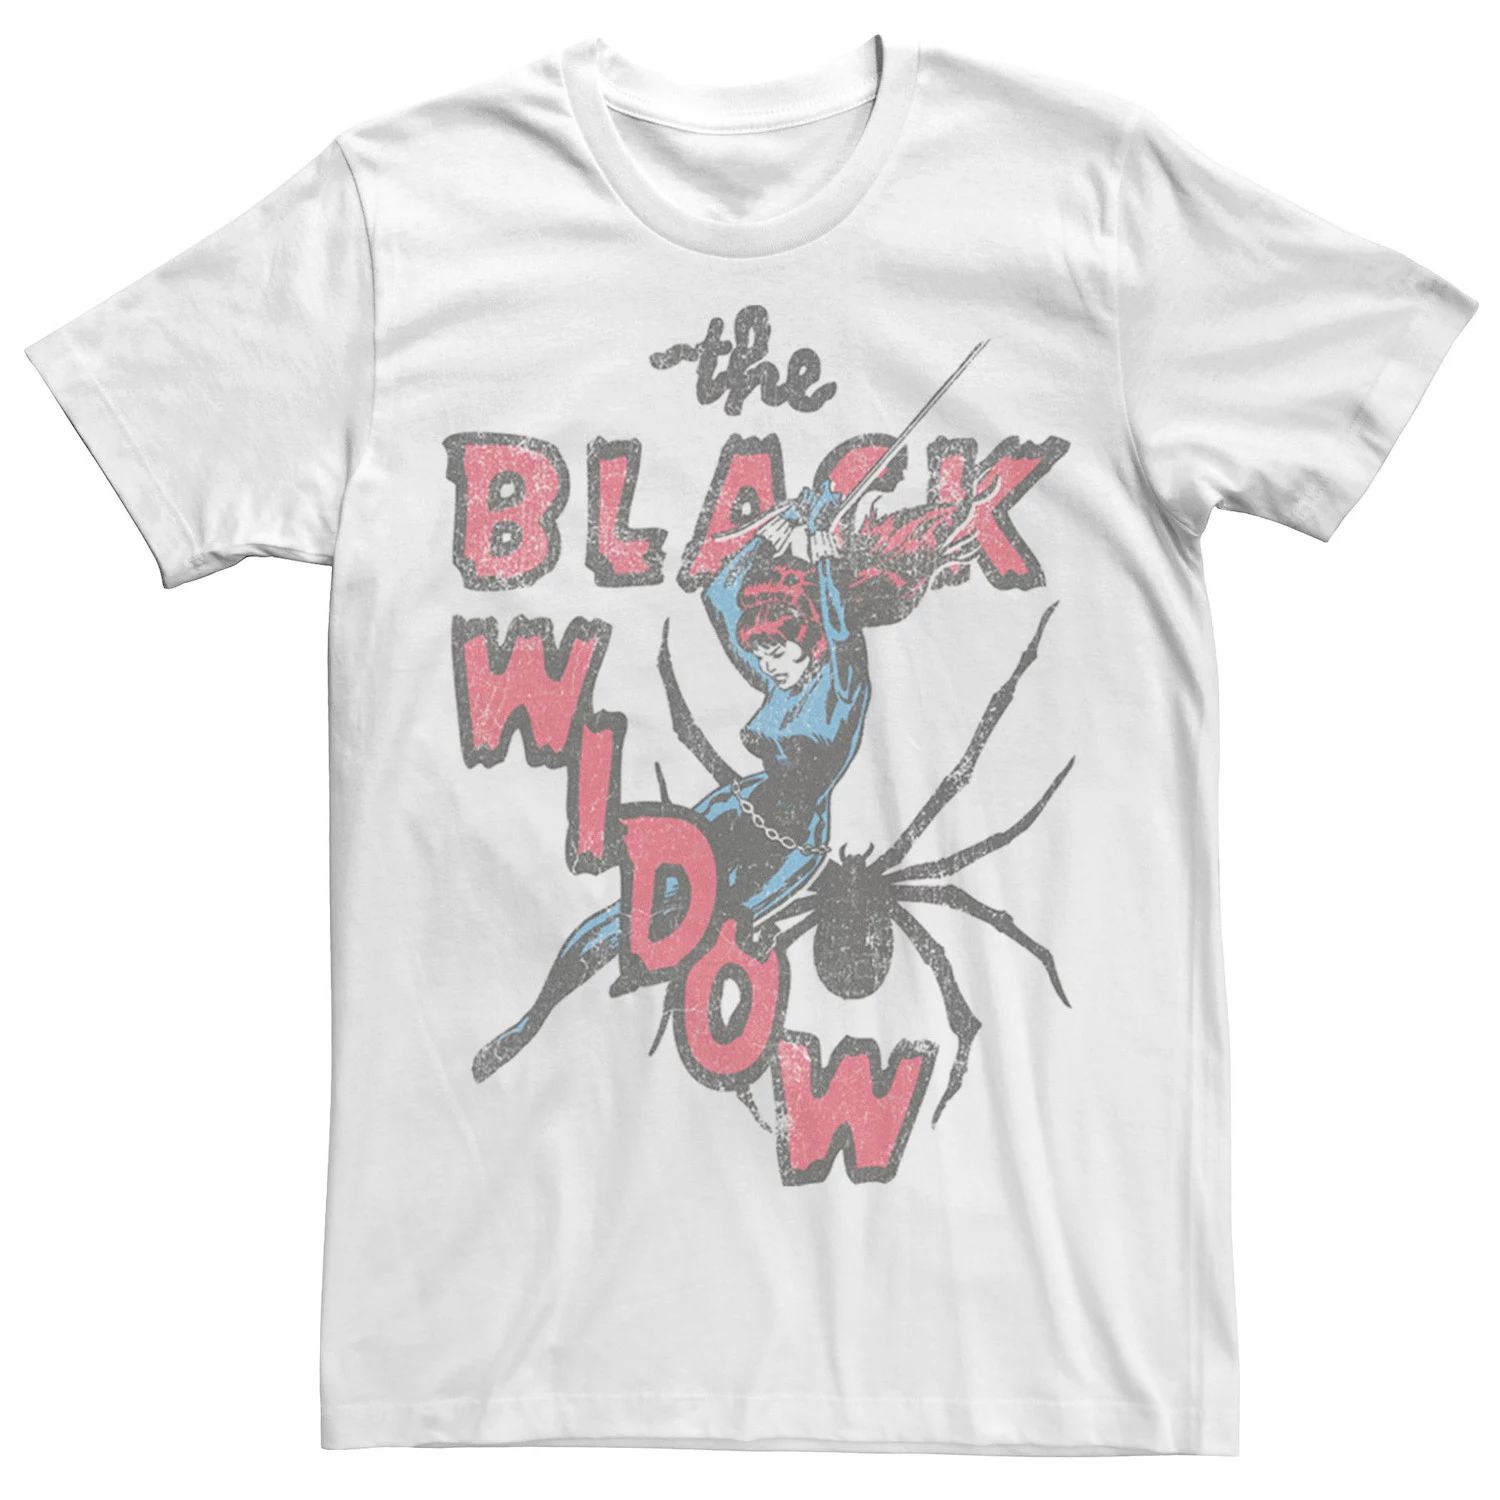 Мужская футболка Marvel Thrifted Black Widow Licensed Character